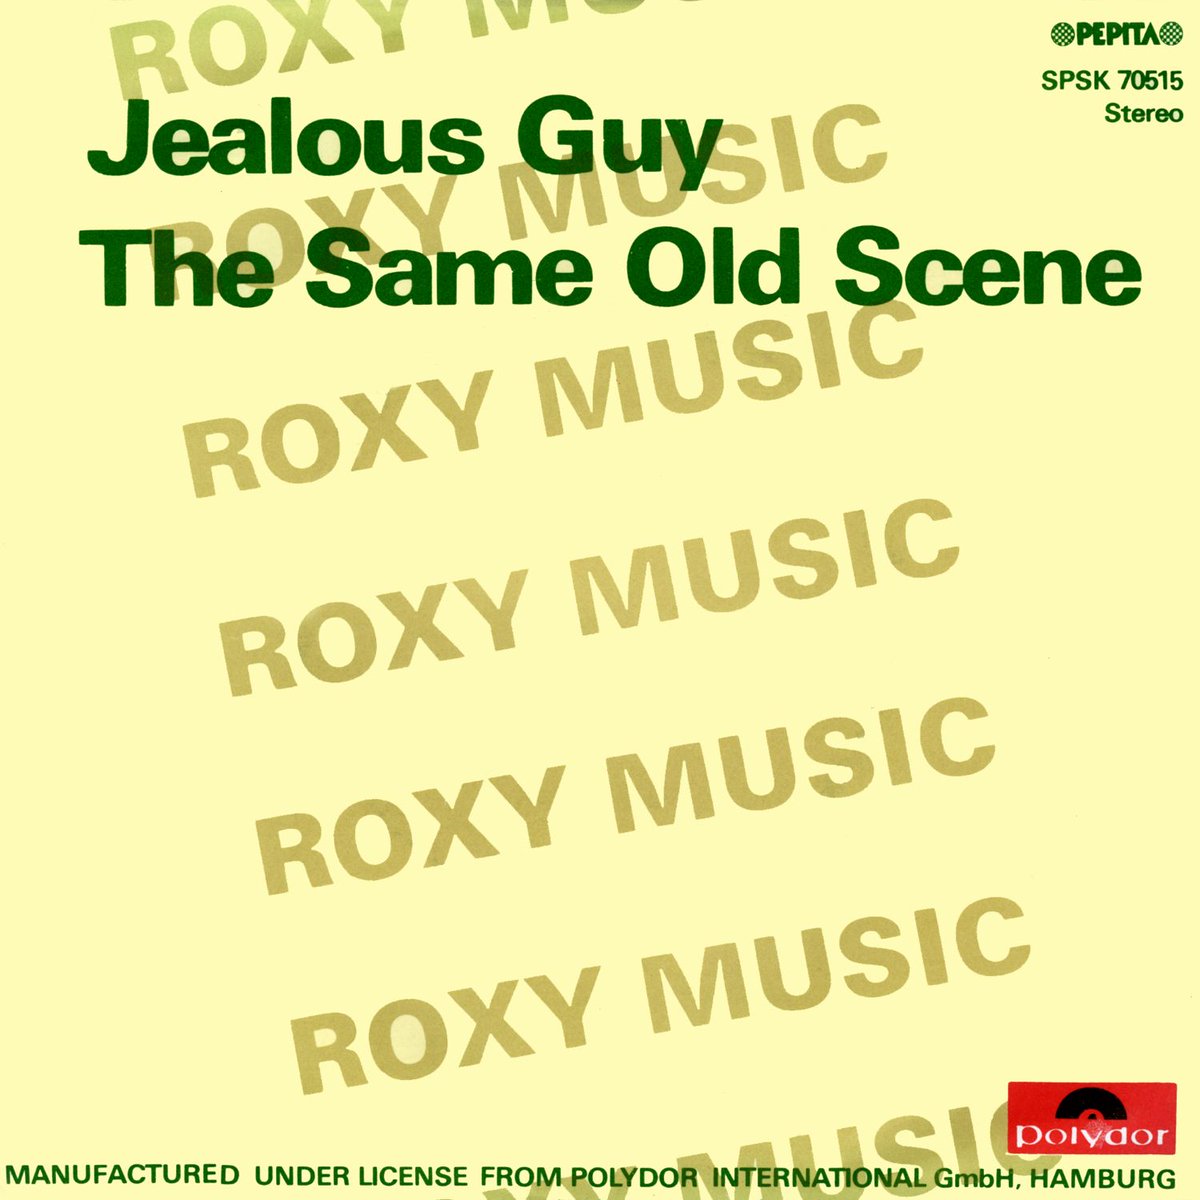 Roxy Music released stand-alone single 'Jealous Guy' c/w 'To Turn You On' in February 1981. lnk.to/rm-bestof #roxymusic #jealousguy #johnlennon